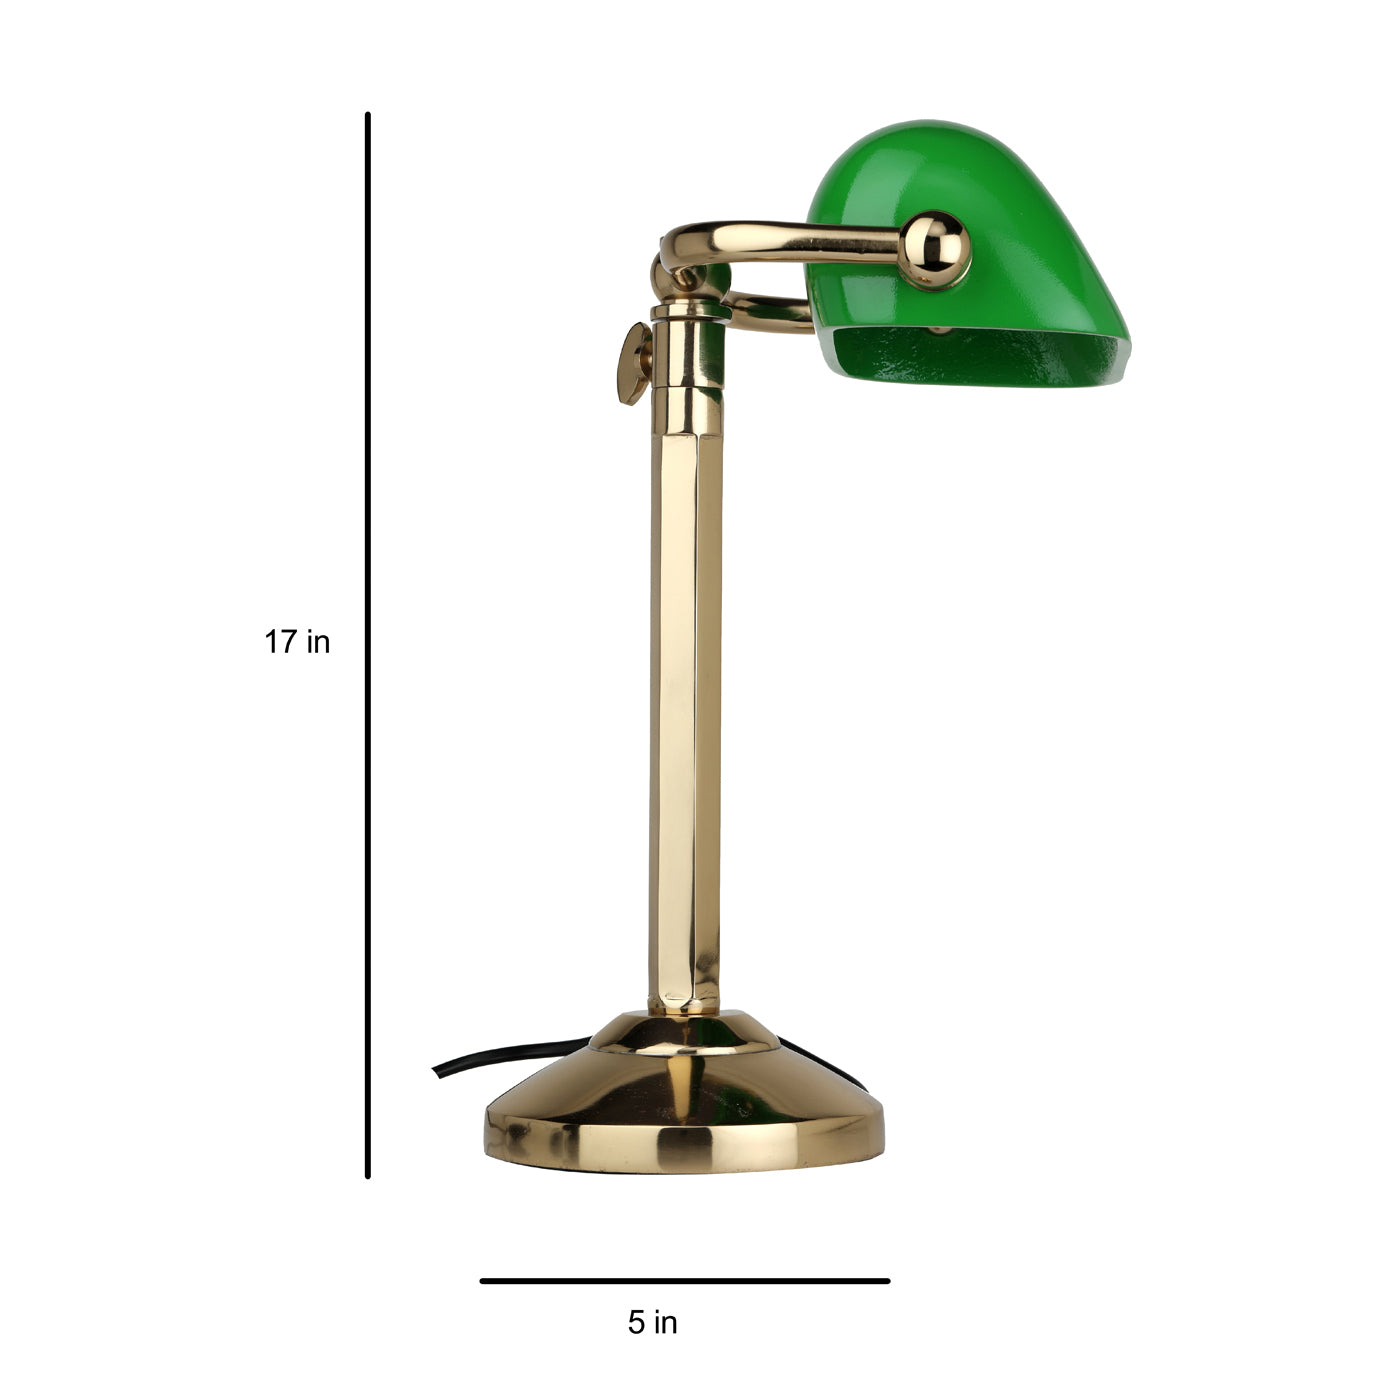 Handcrafted Green Banker's Adjustable Lamp